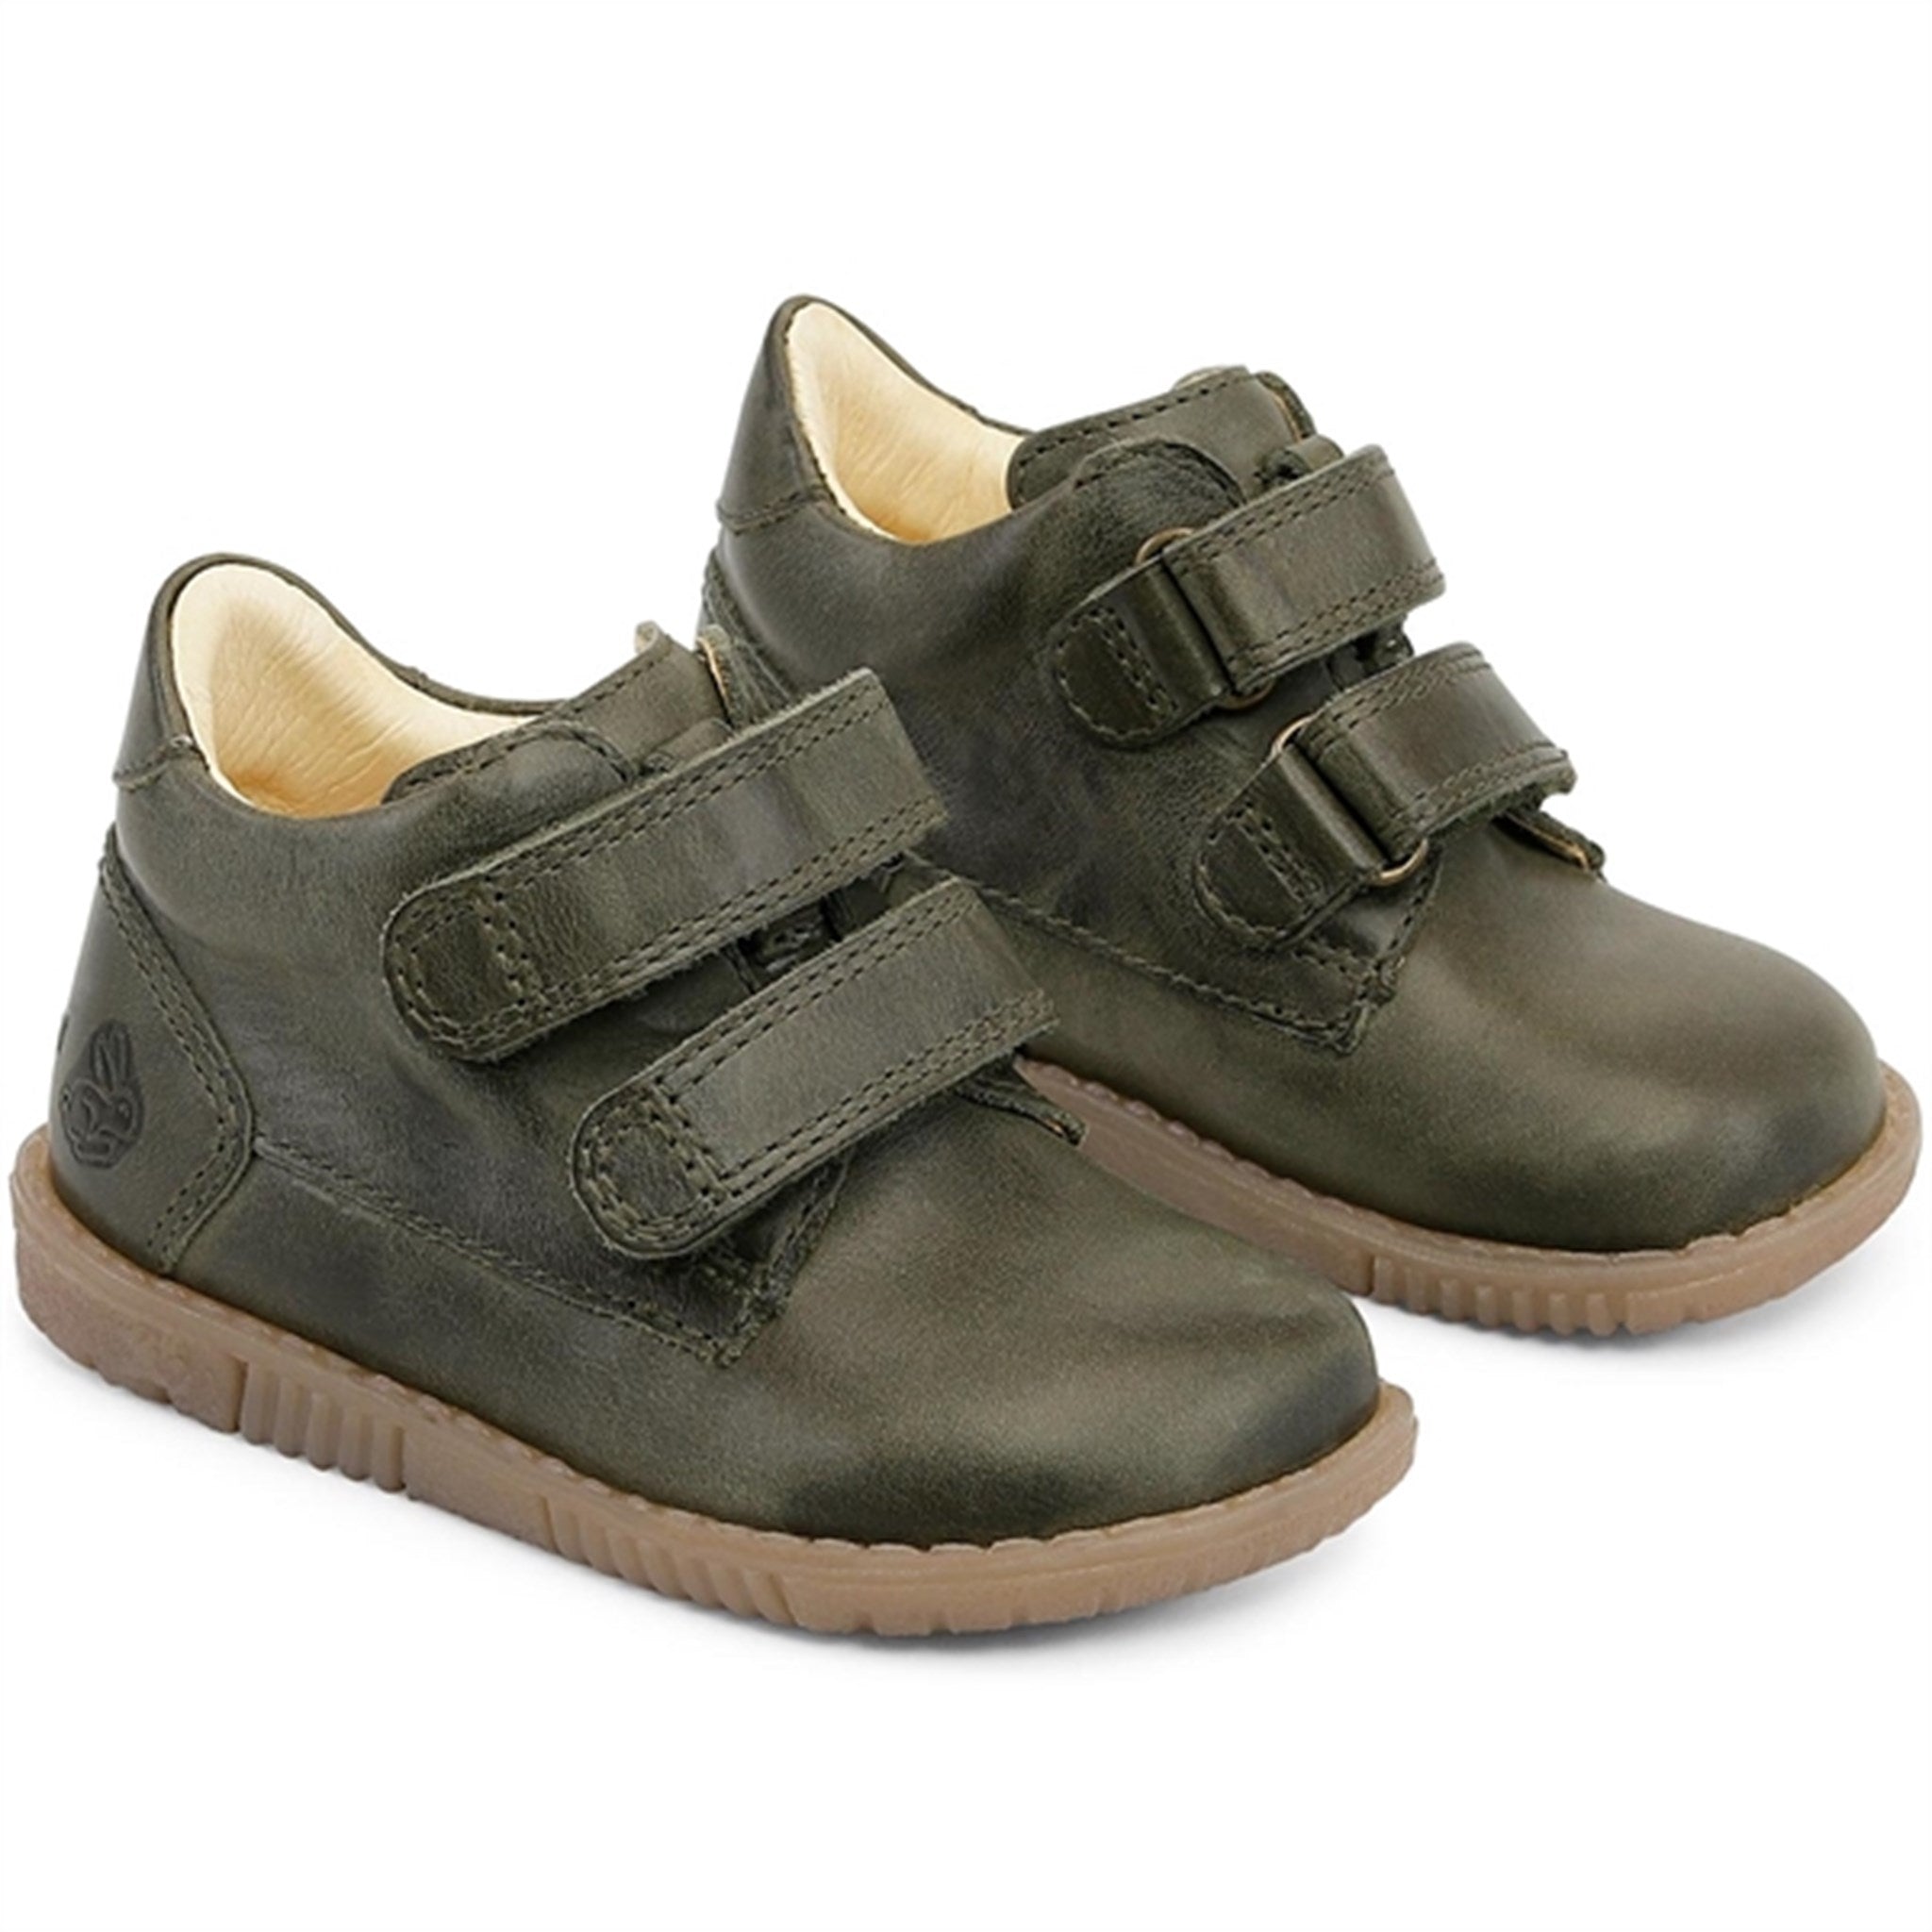 Bundgaard Ruby Velcro Army Shoes